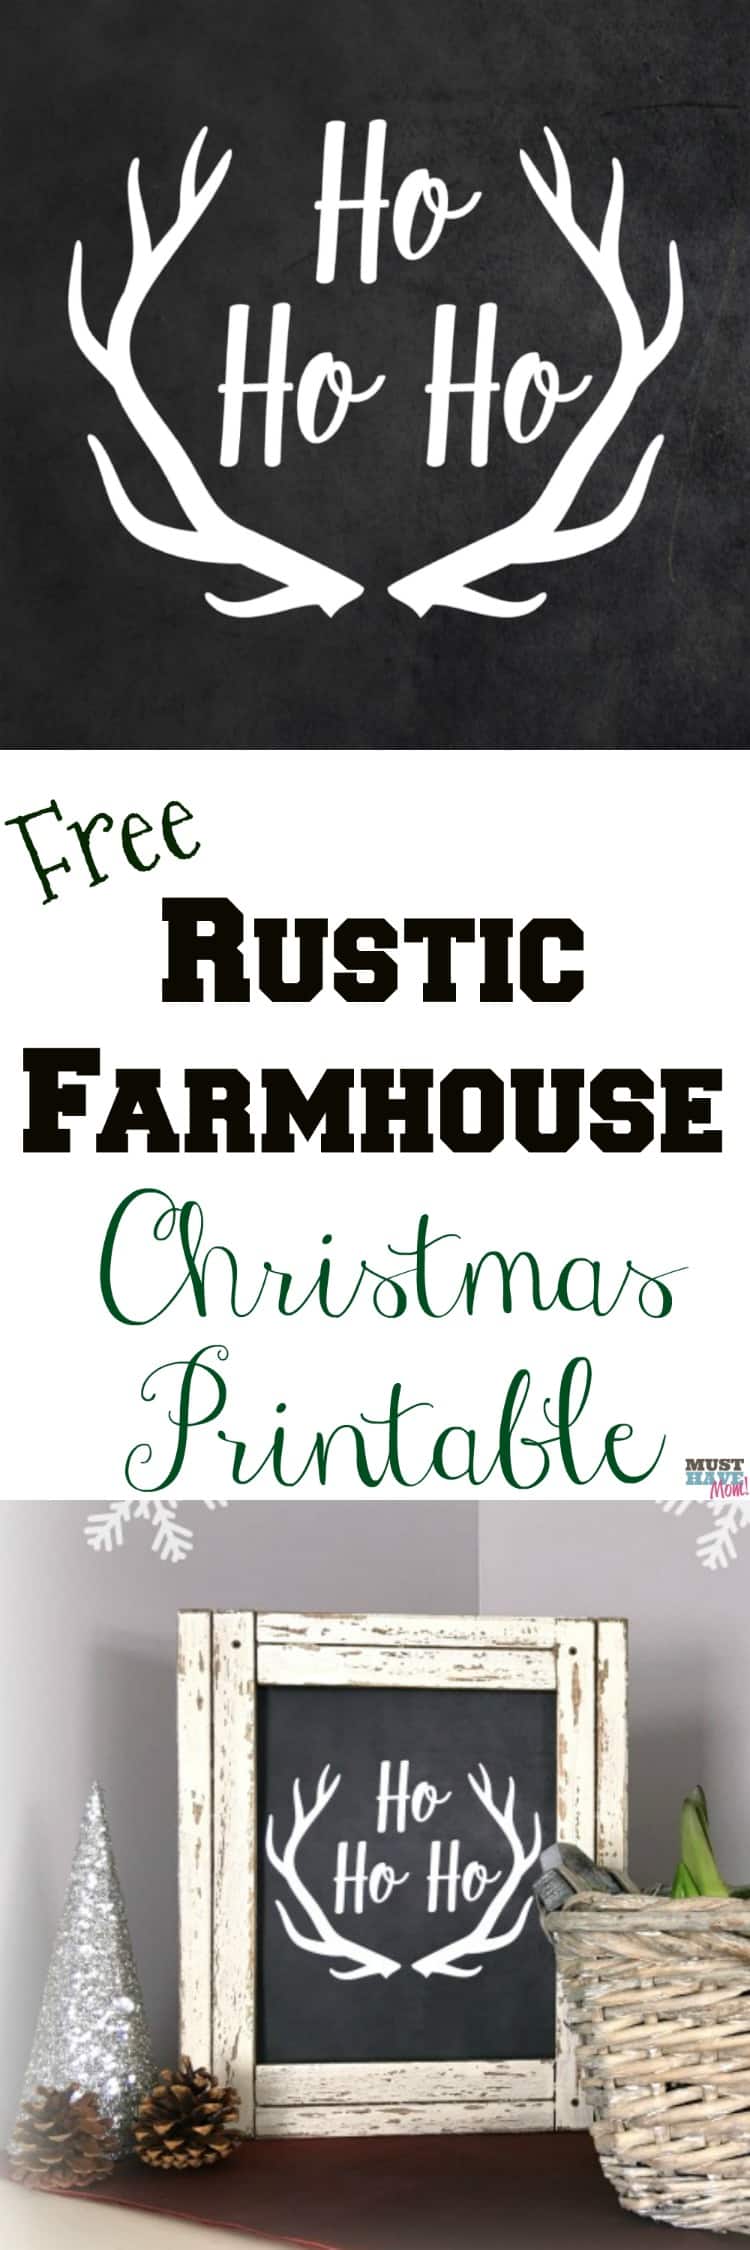 Free rustic farmhouse Christmas printable! Love this Christmas farmhouse decor idea. Free Christmas printable Ho Ho Ho rustic chalkboard sign is perfect for farmhouse decor idea!